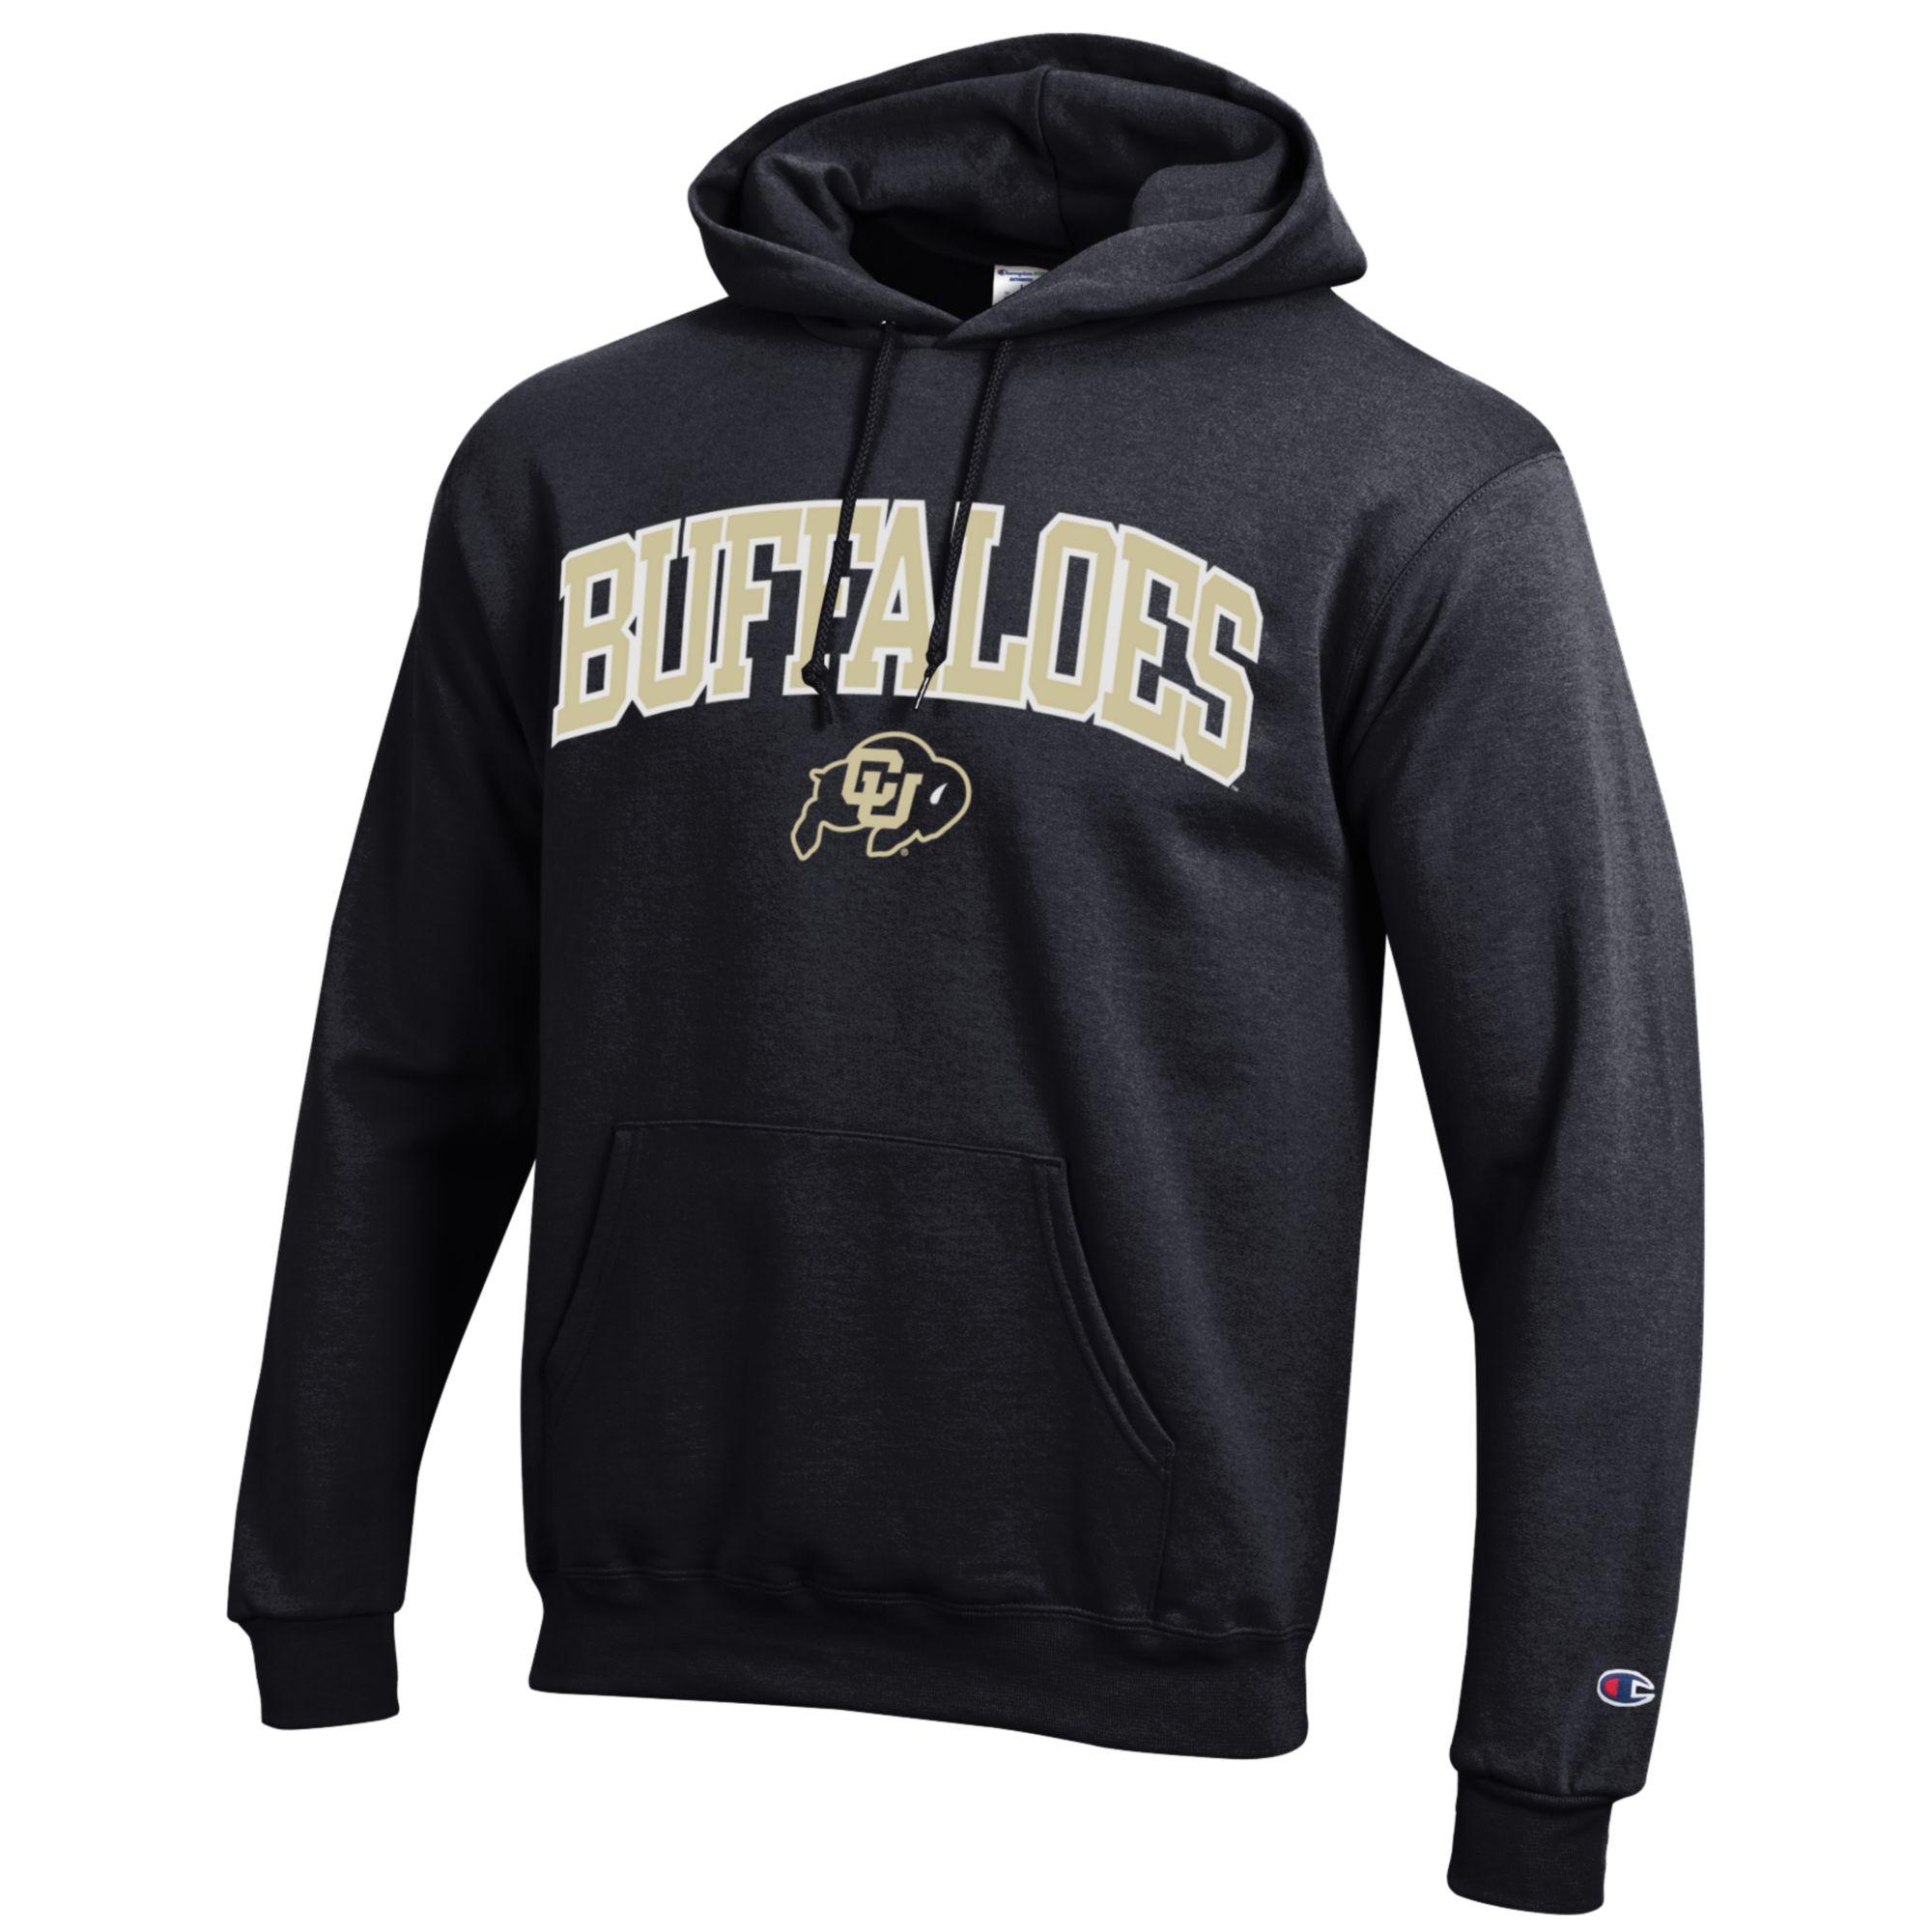 Champion University of Colorado Buffalos Hooded Sweatshirt Black Large